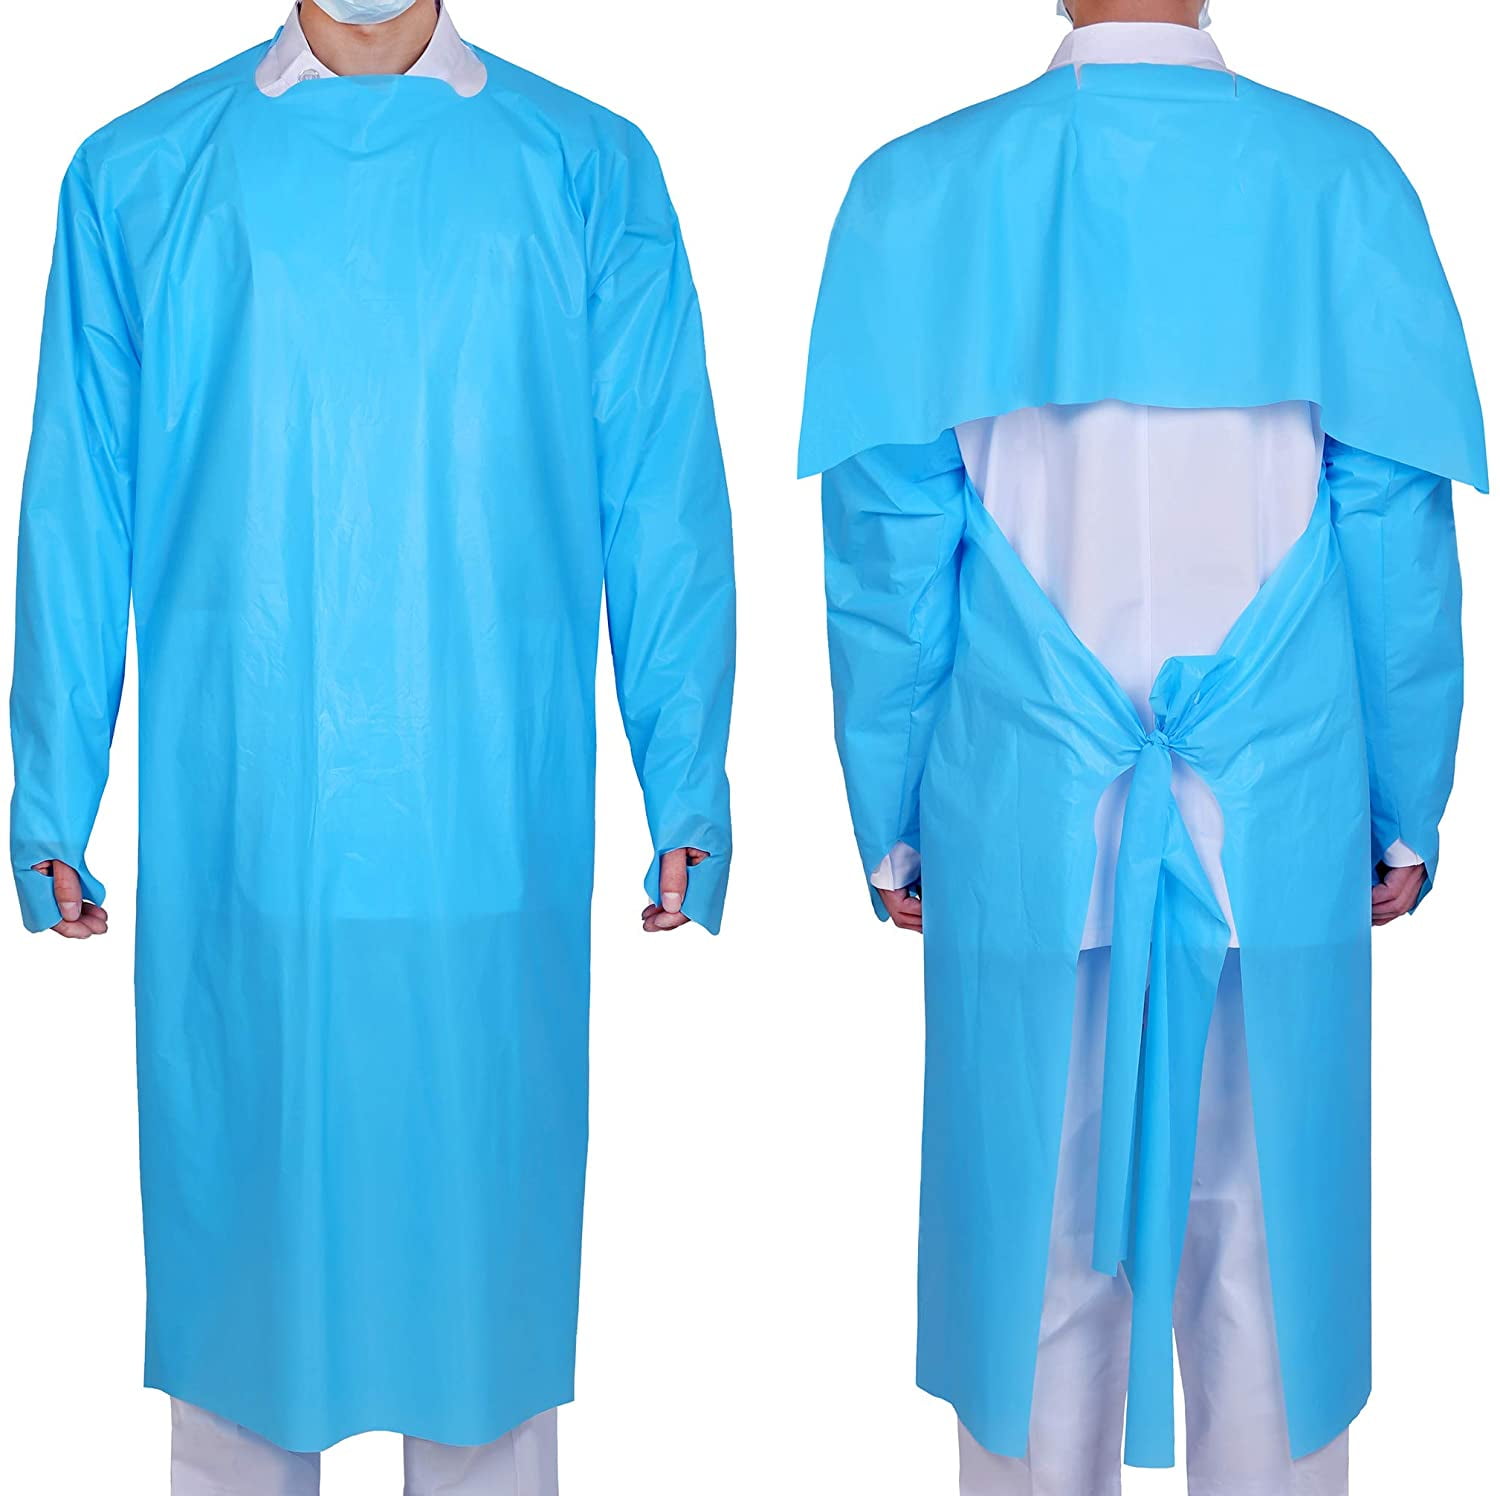 Halyard Health Surgical Gowns (XL) : Amazon.in: Industrial & Scientific